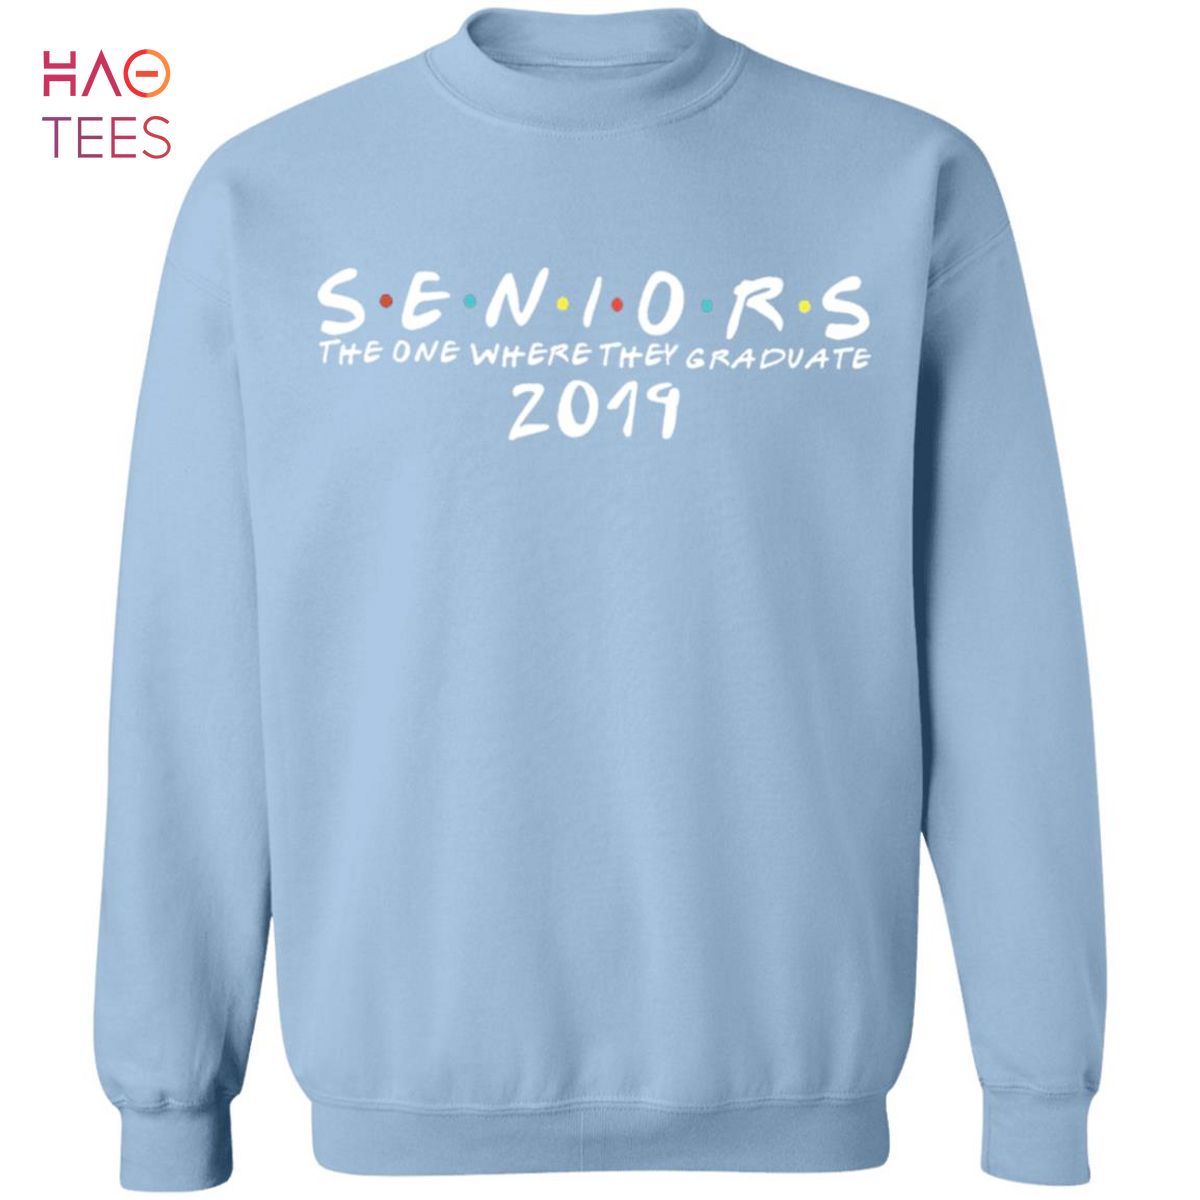 BEST Senior Sweater Ideas